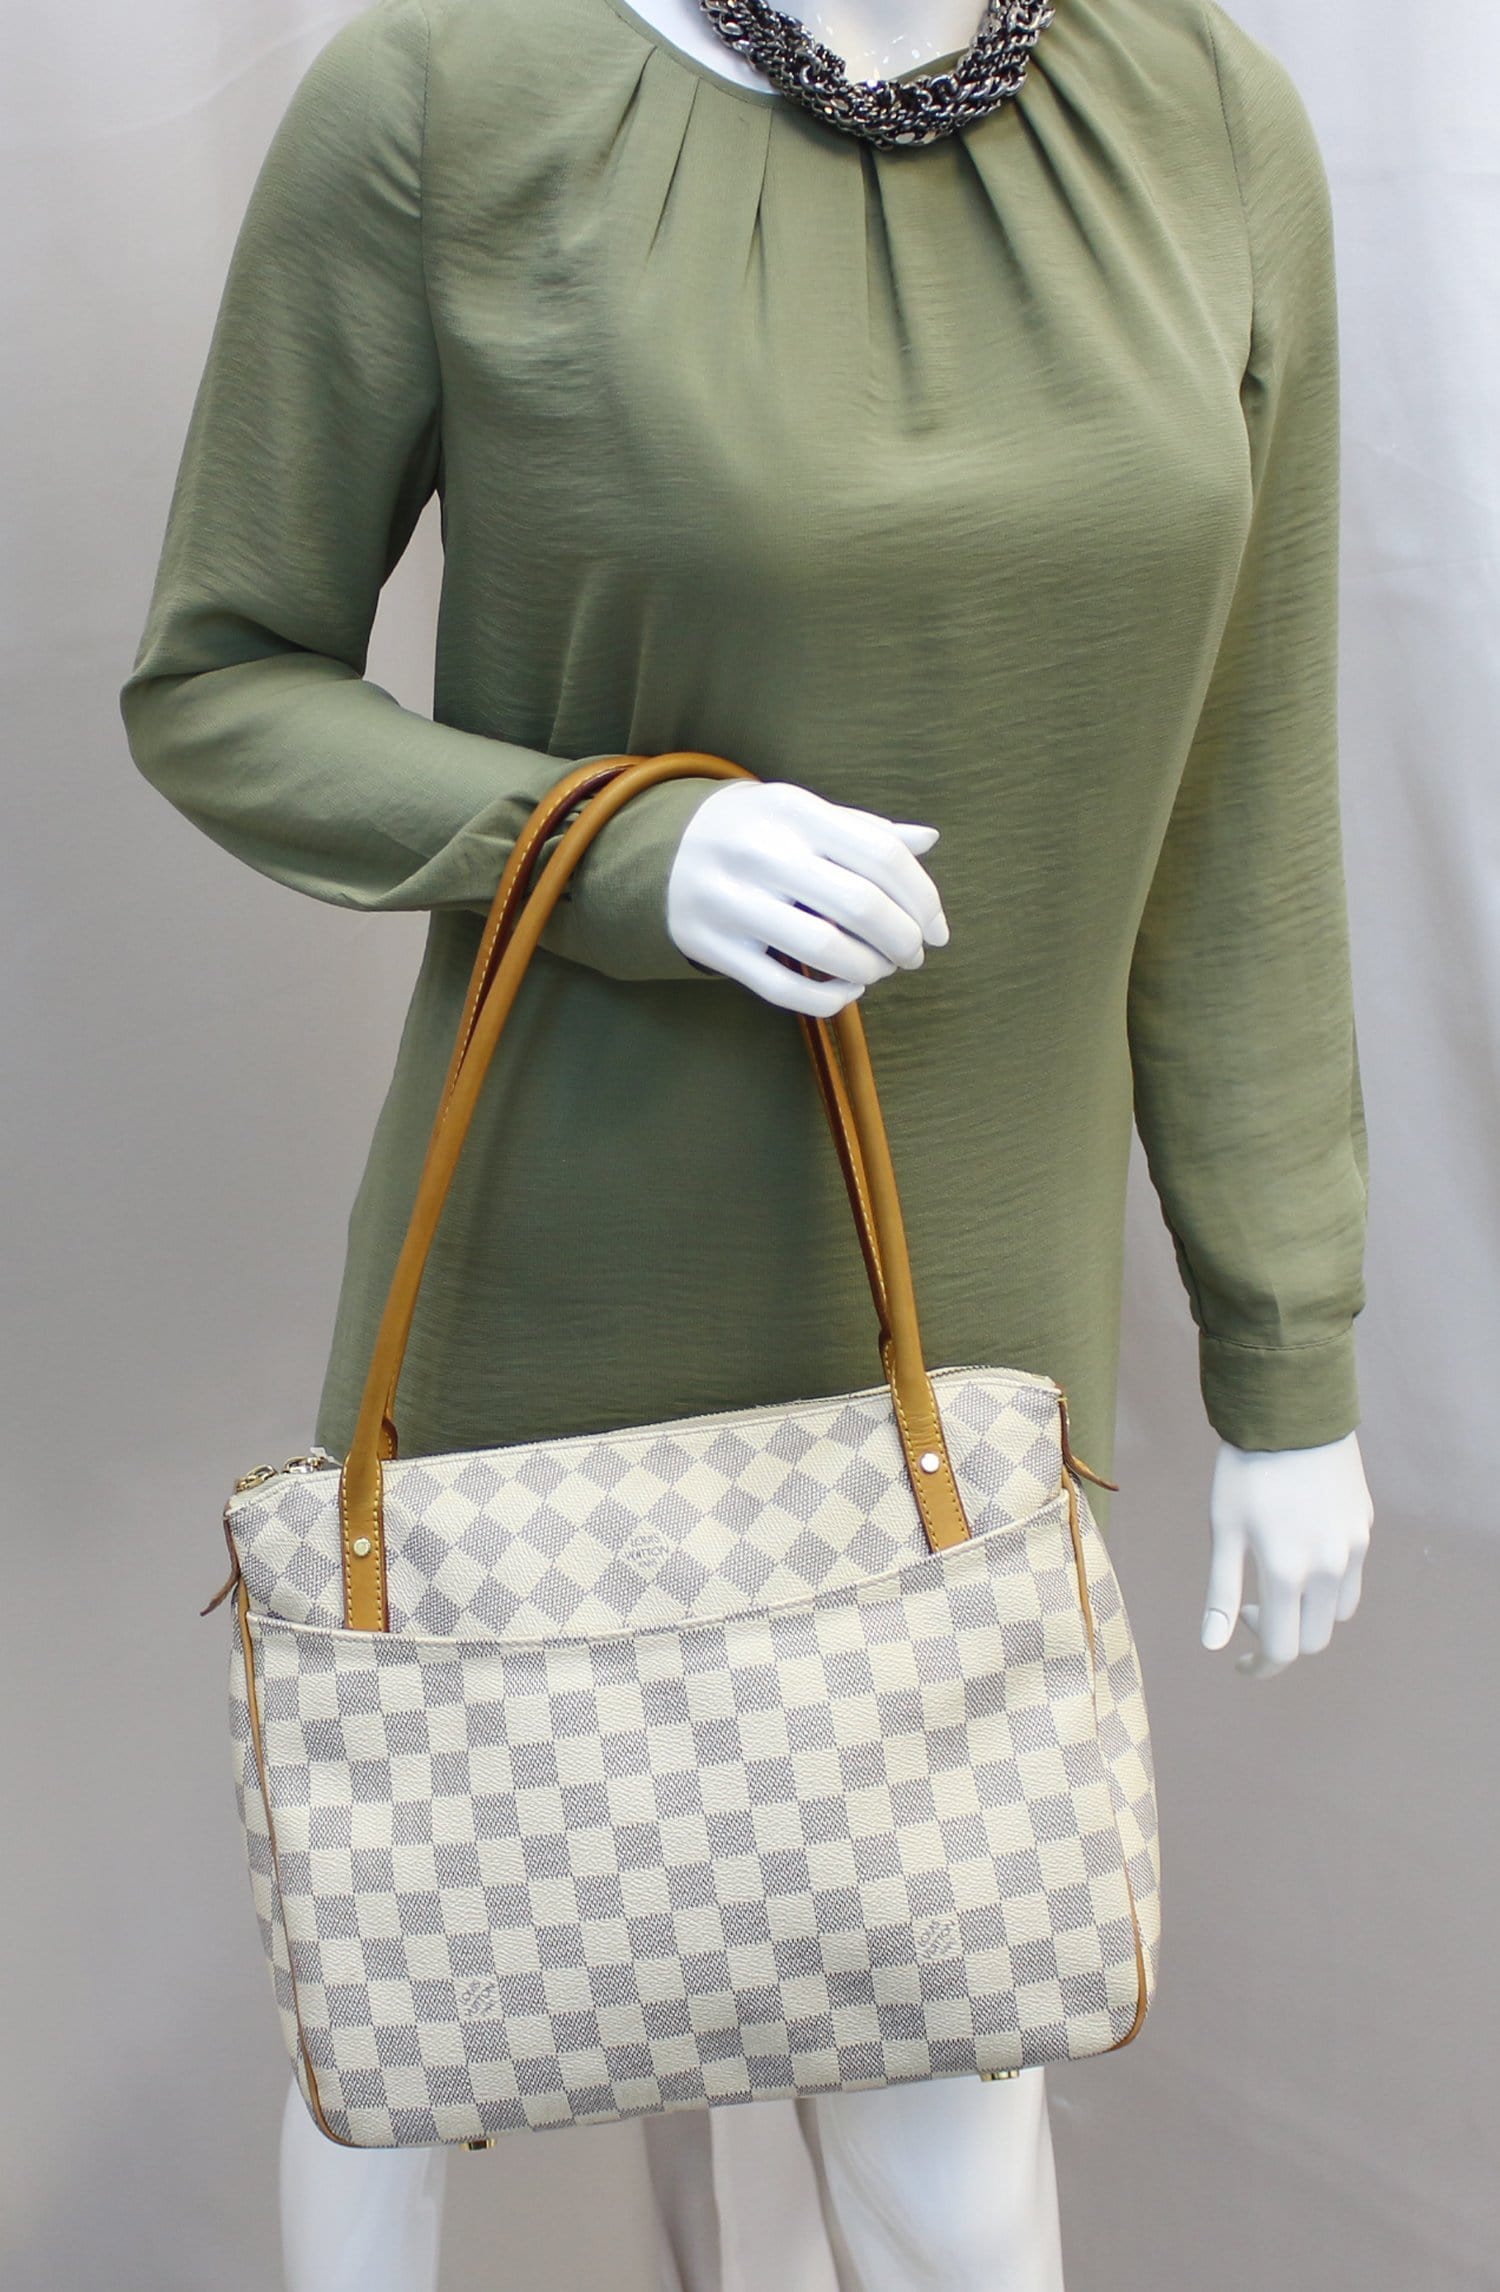 Louis Vuitton Shoulder Bag in Shibuya – Tokyo Fashion